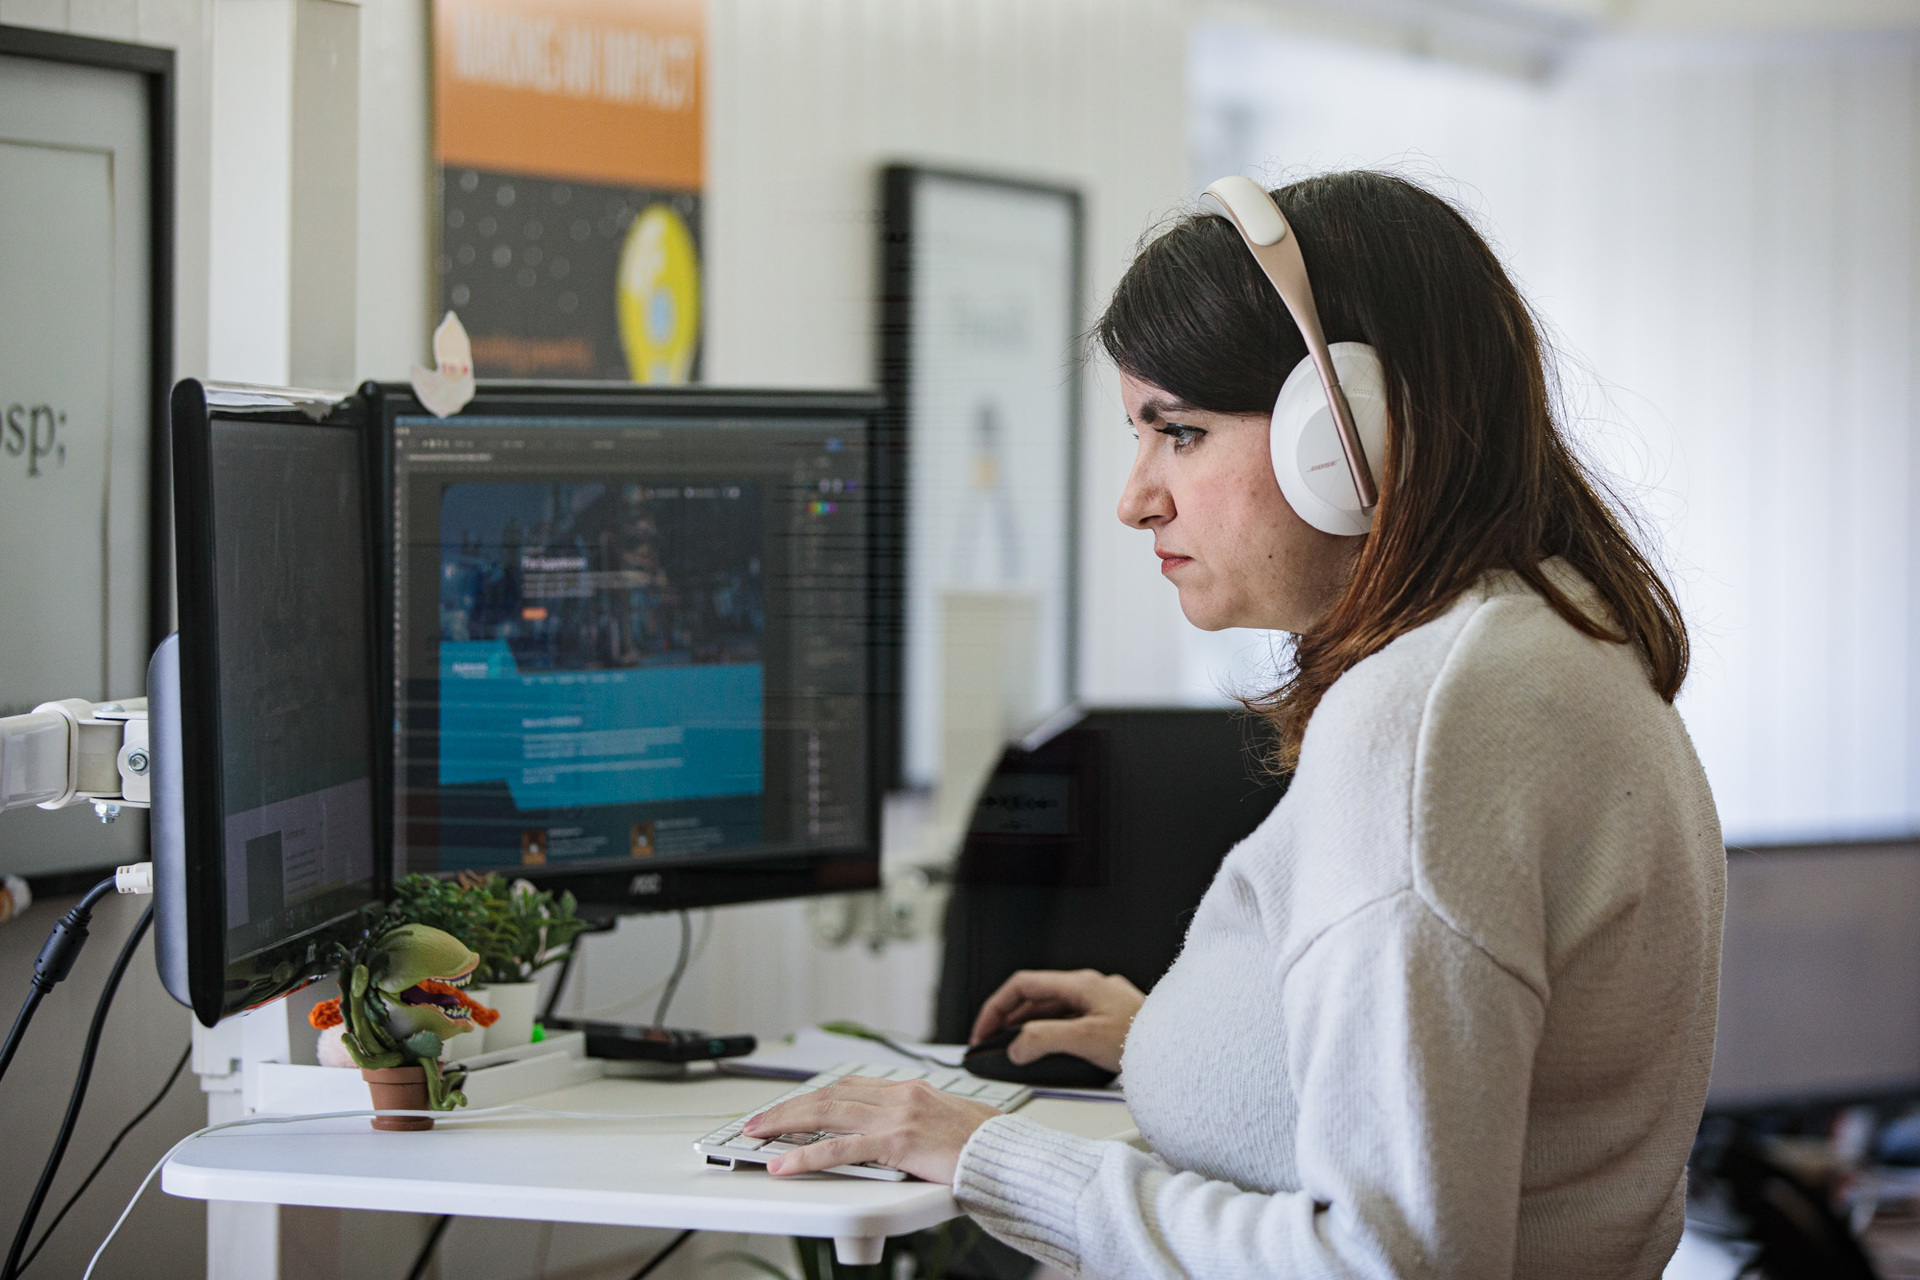 A woman wearing headphones, looking at her desktop computer